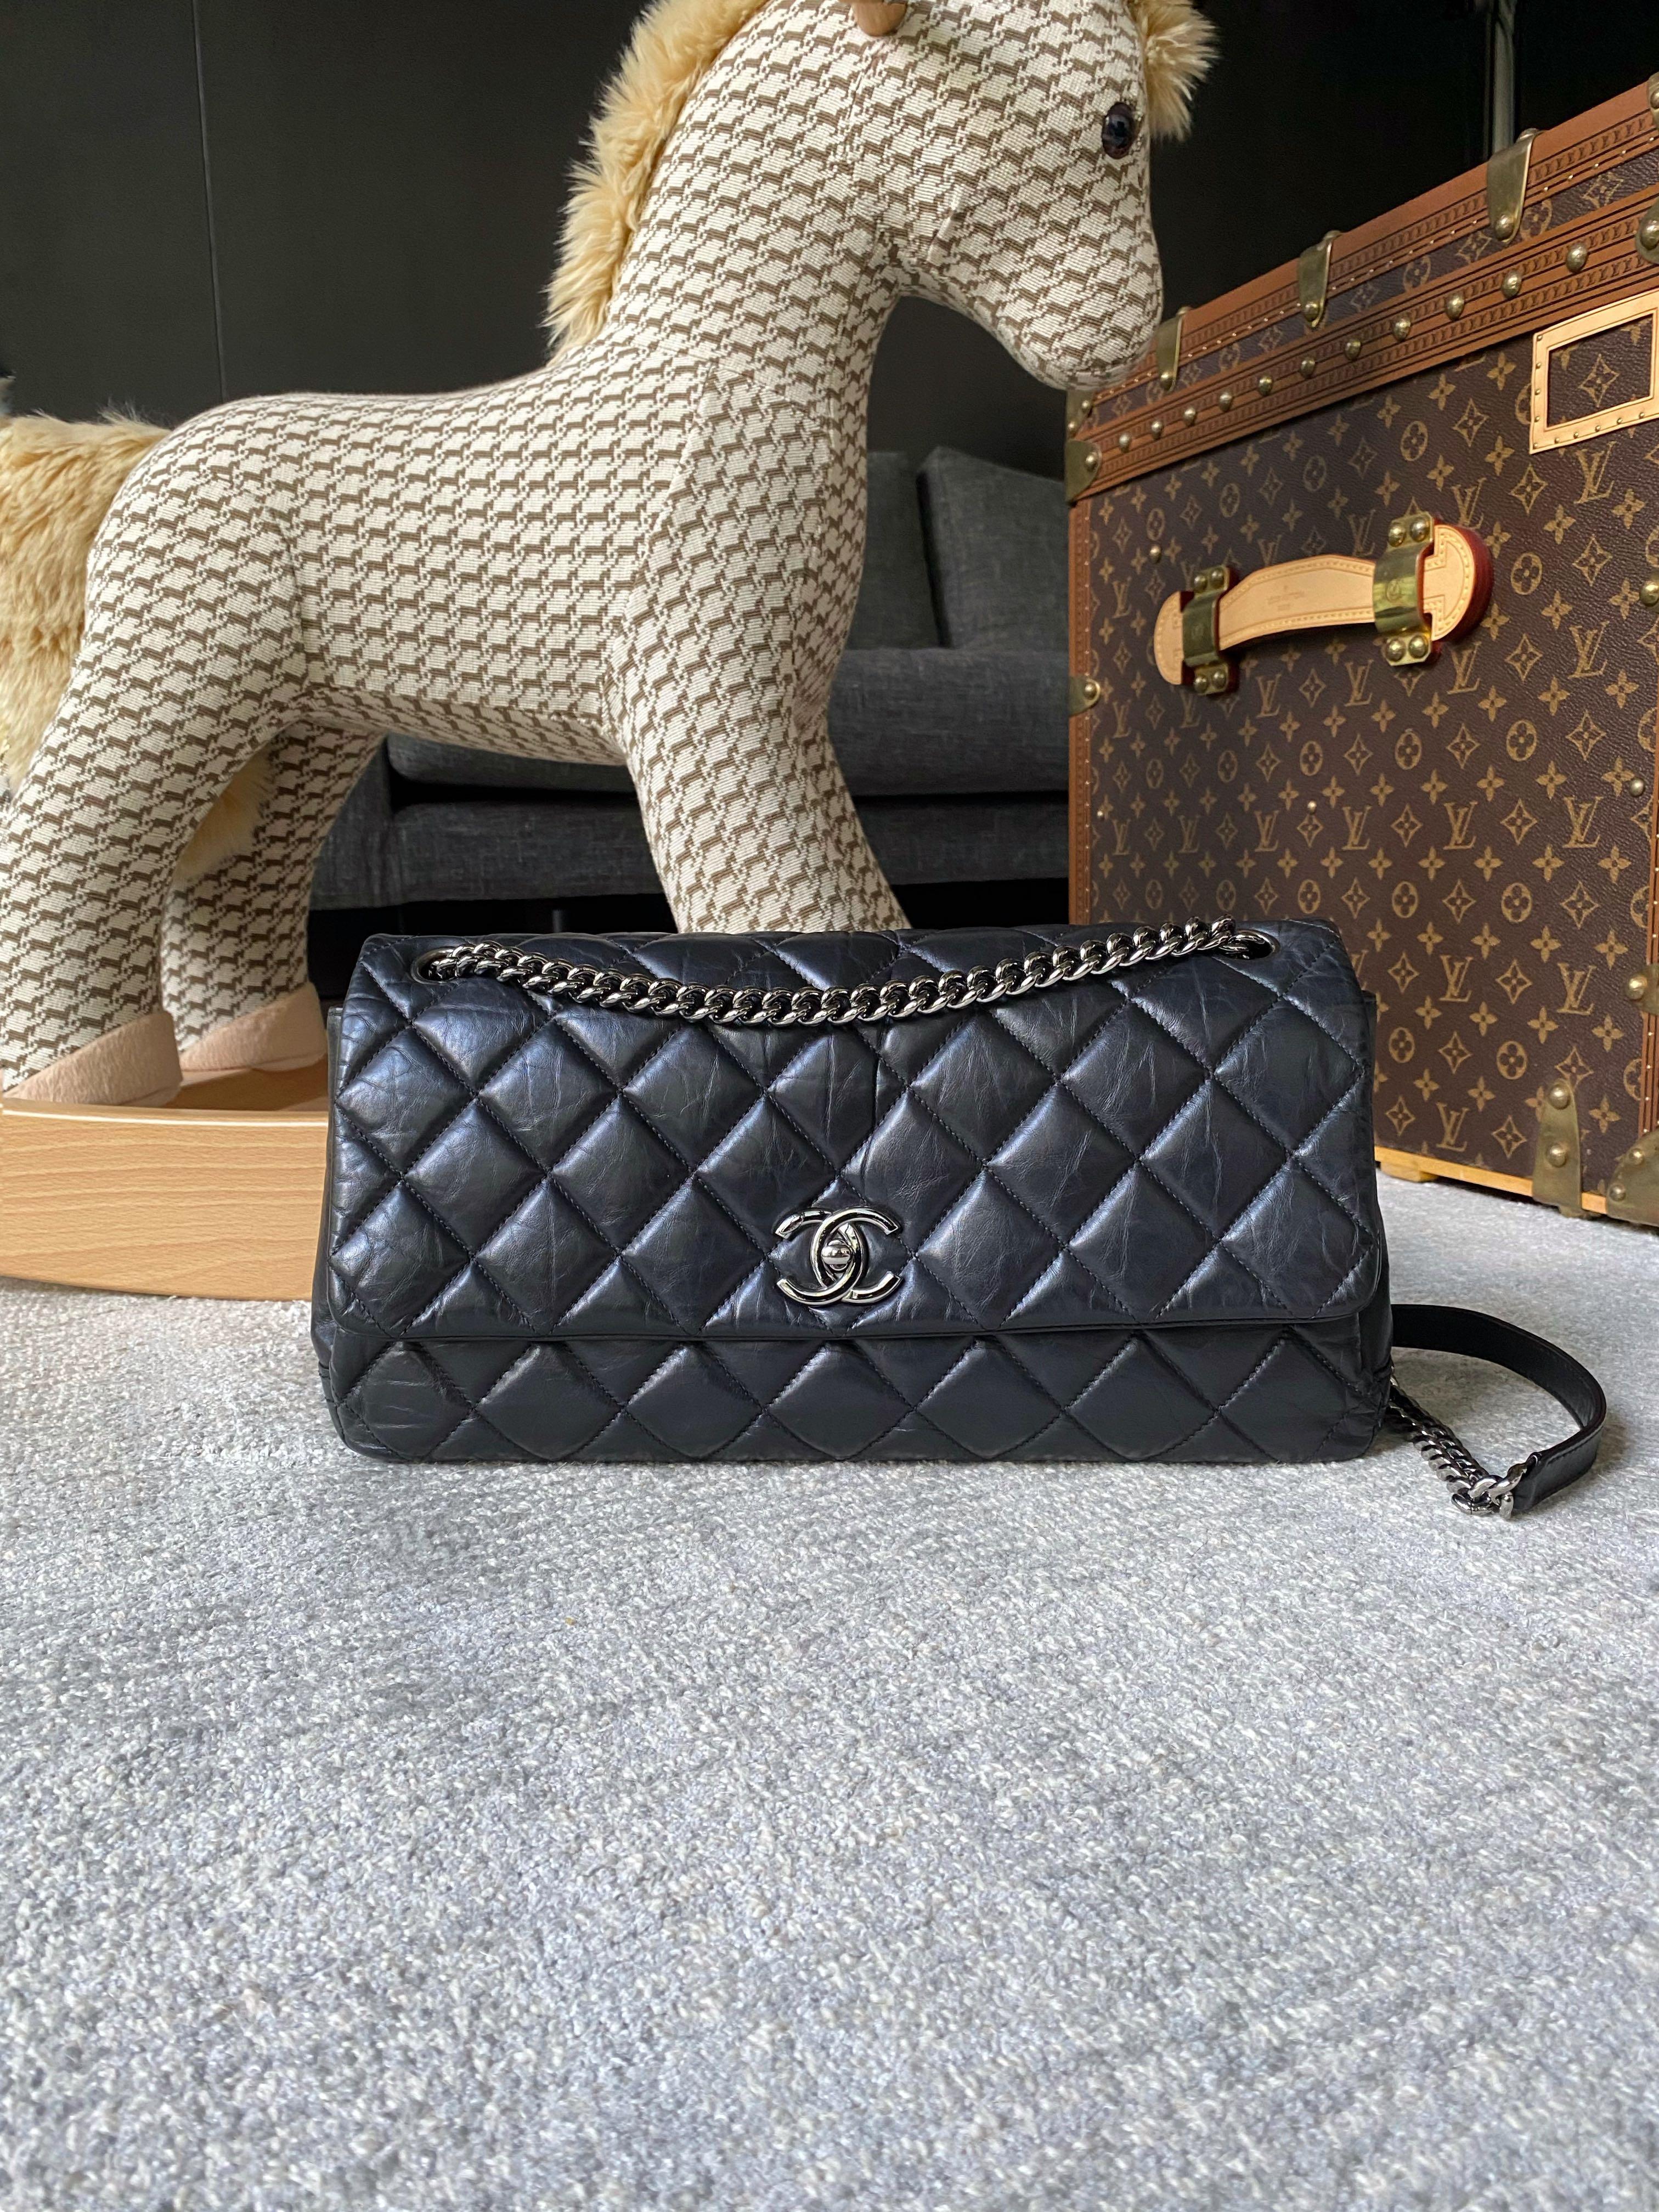 D' Borse Boutique - Chanel Pearl Crush Mini Rectangular Flap Bag